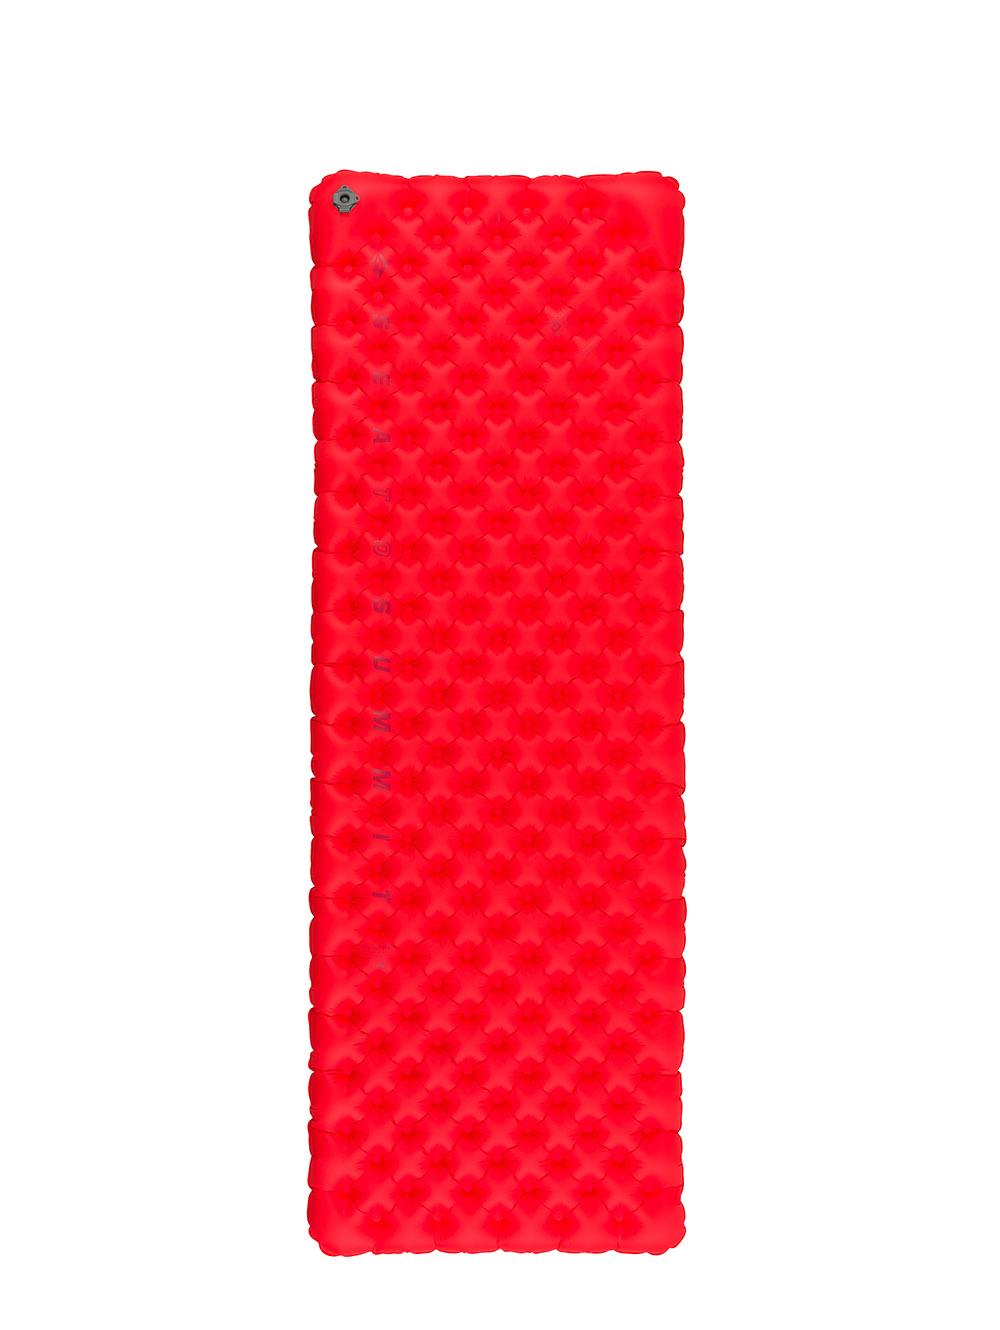 Air Sprung Comfort Plus XT Insulated Mat Rectangular Wide килимок надувний 80mm (Red, Regular), фото